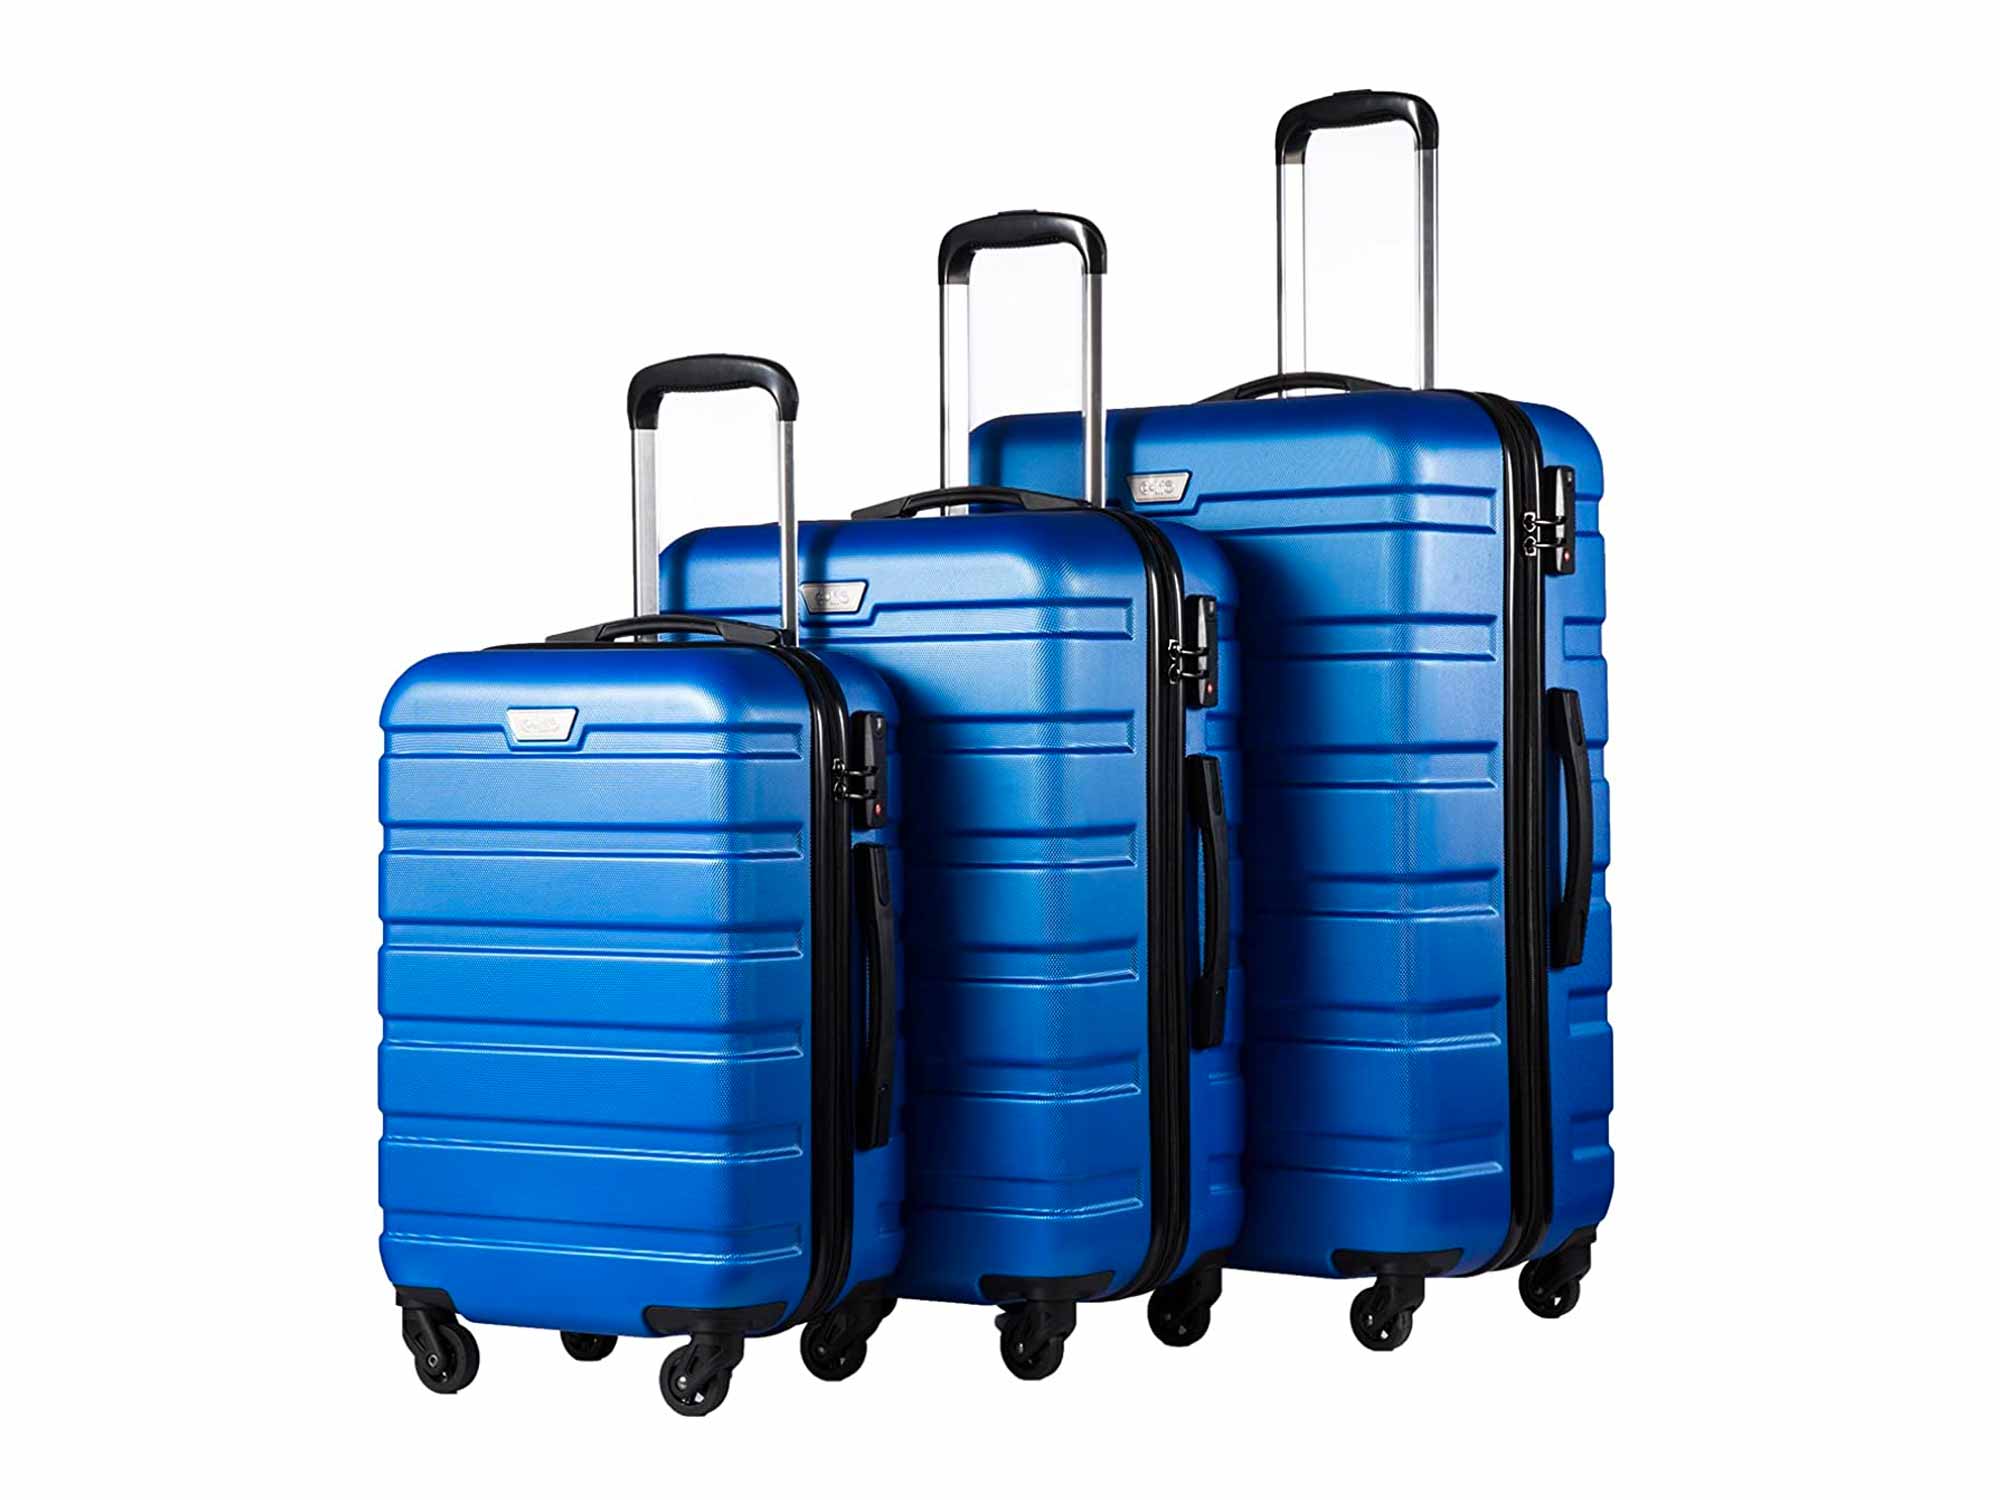 COOLIFE Luggage 3 Piece Set Suitcase Spinner Hardshell Lightweight TSA Lock 4 Piece Set